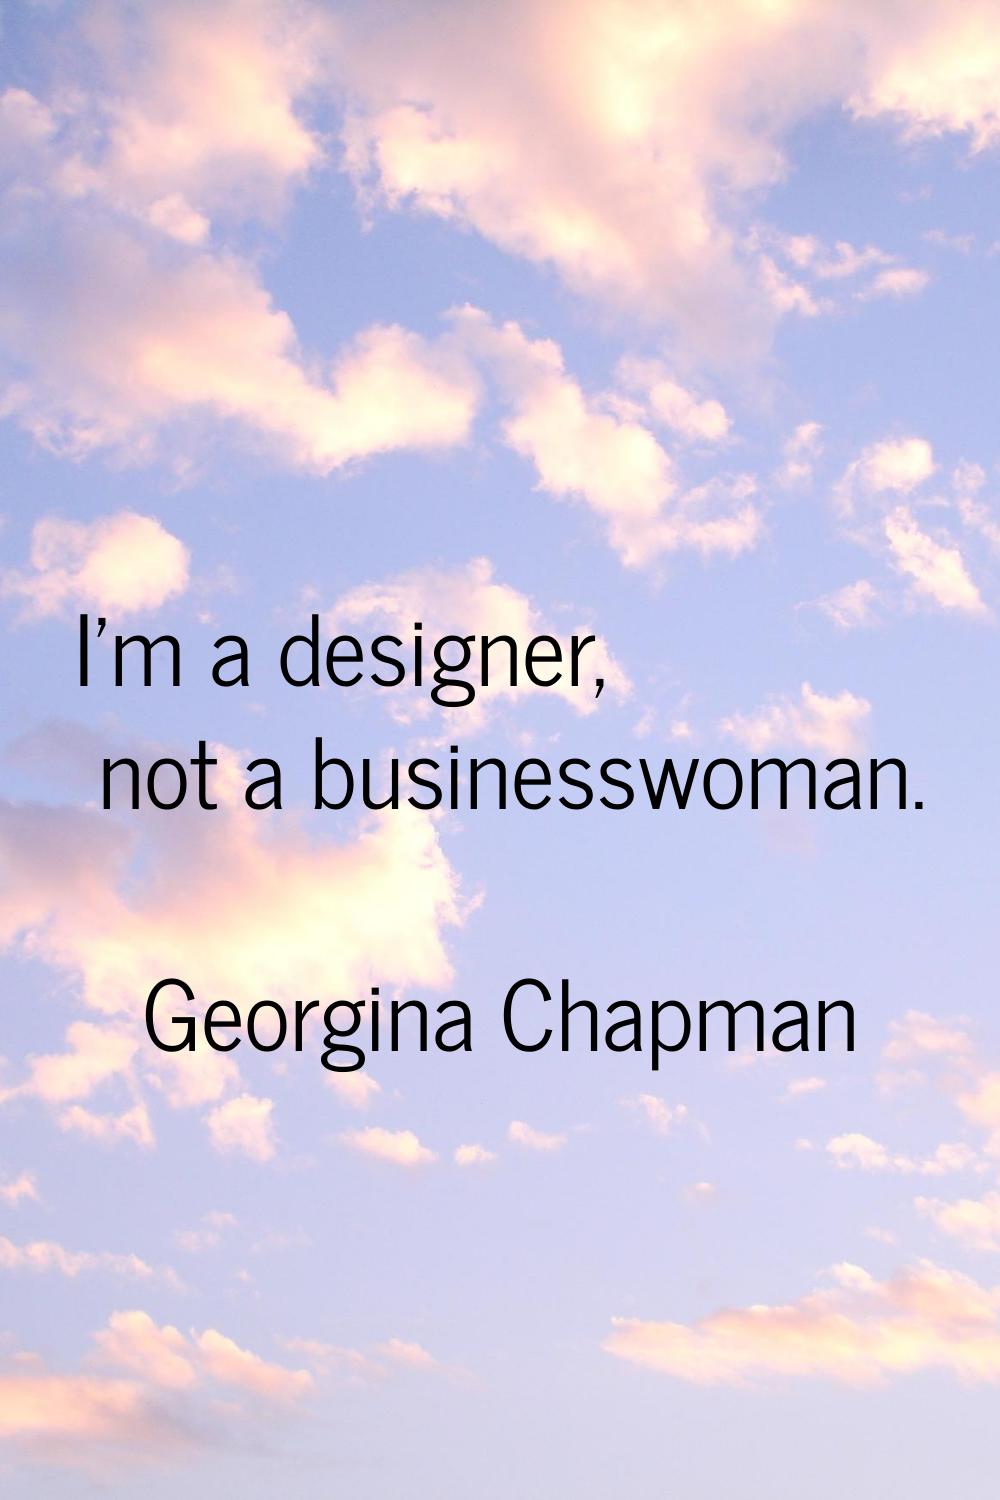 I'm a designer, not a businesswoman.